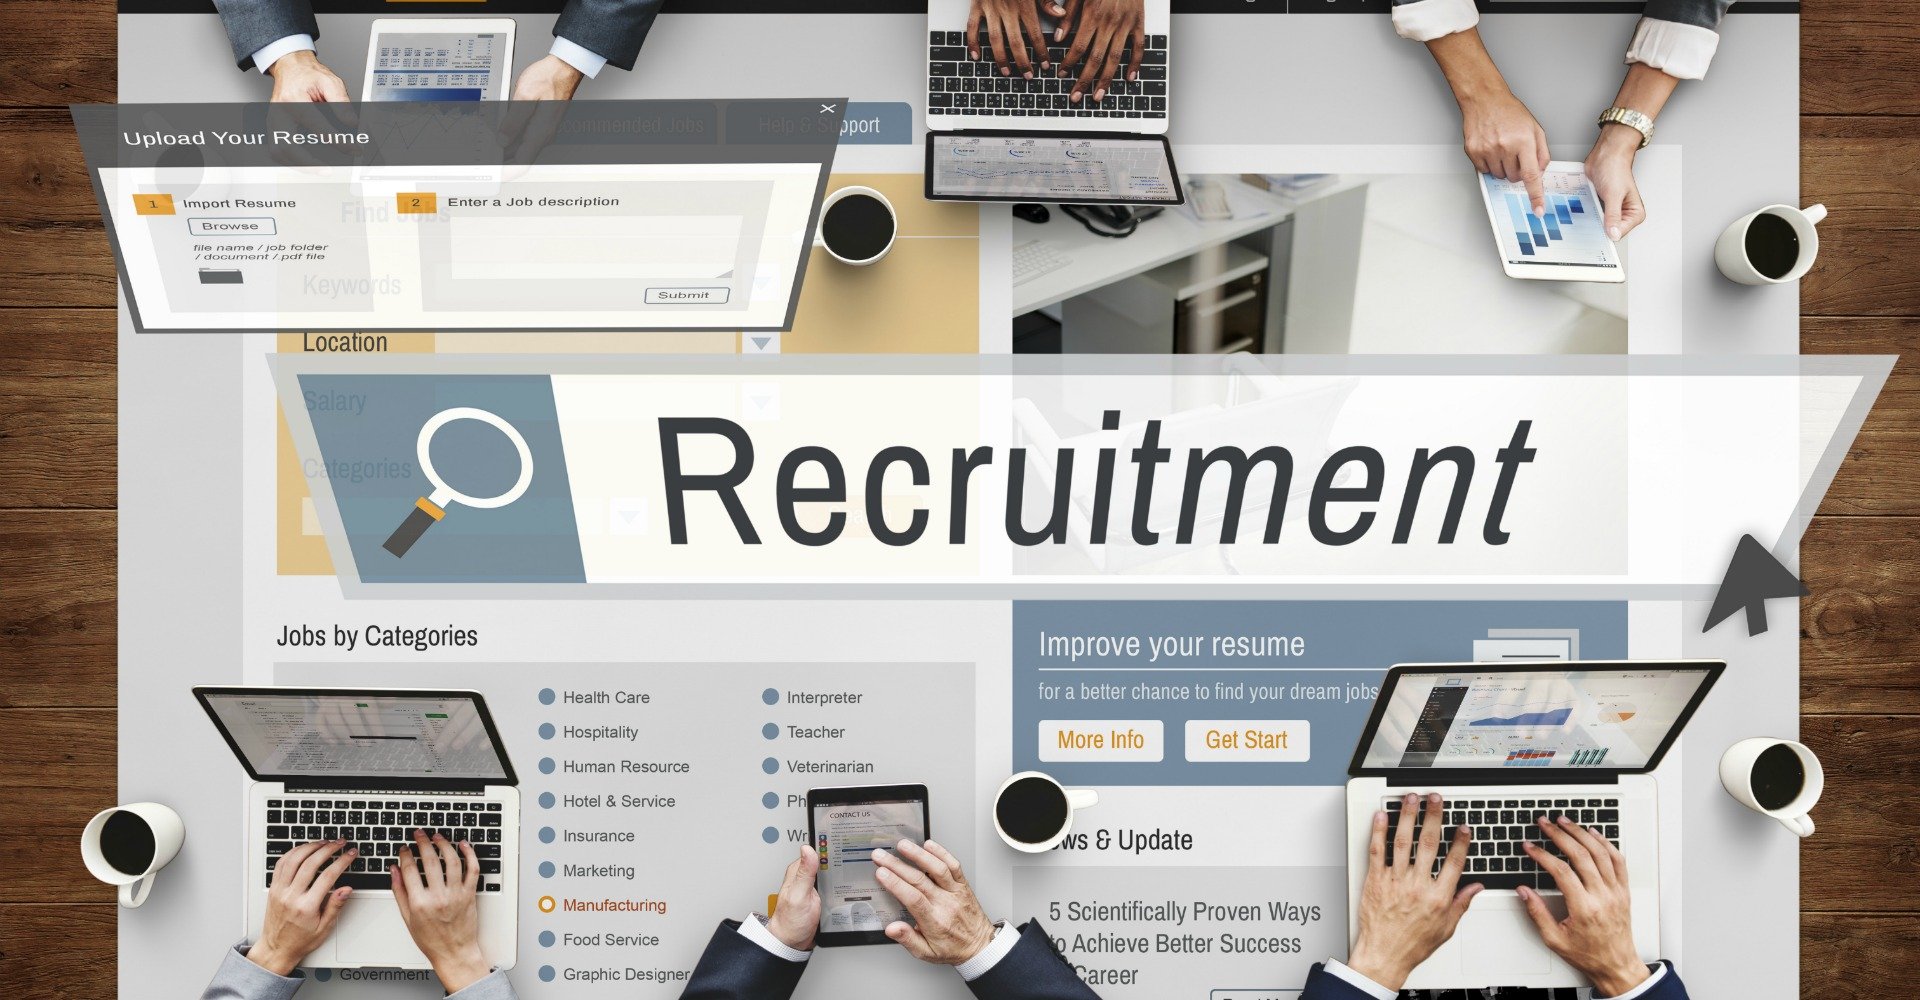 2018 Top Recruitment Software Tools for Technical Job Recruiters.jpg